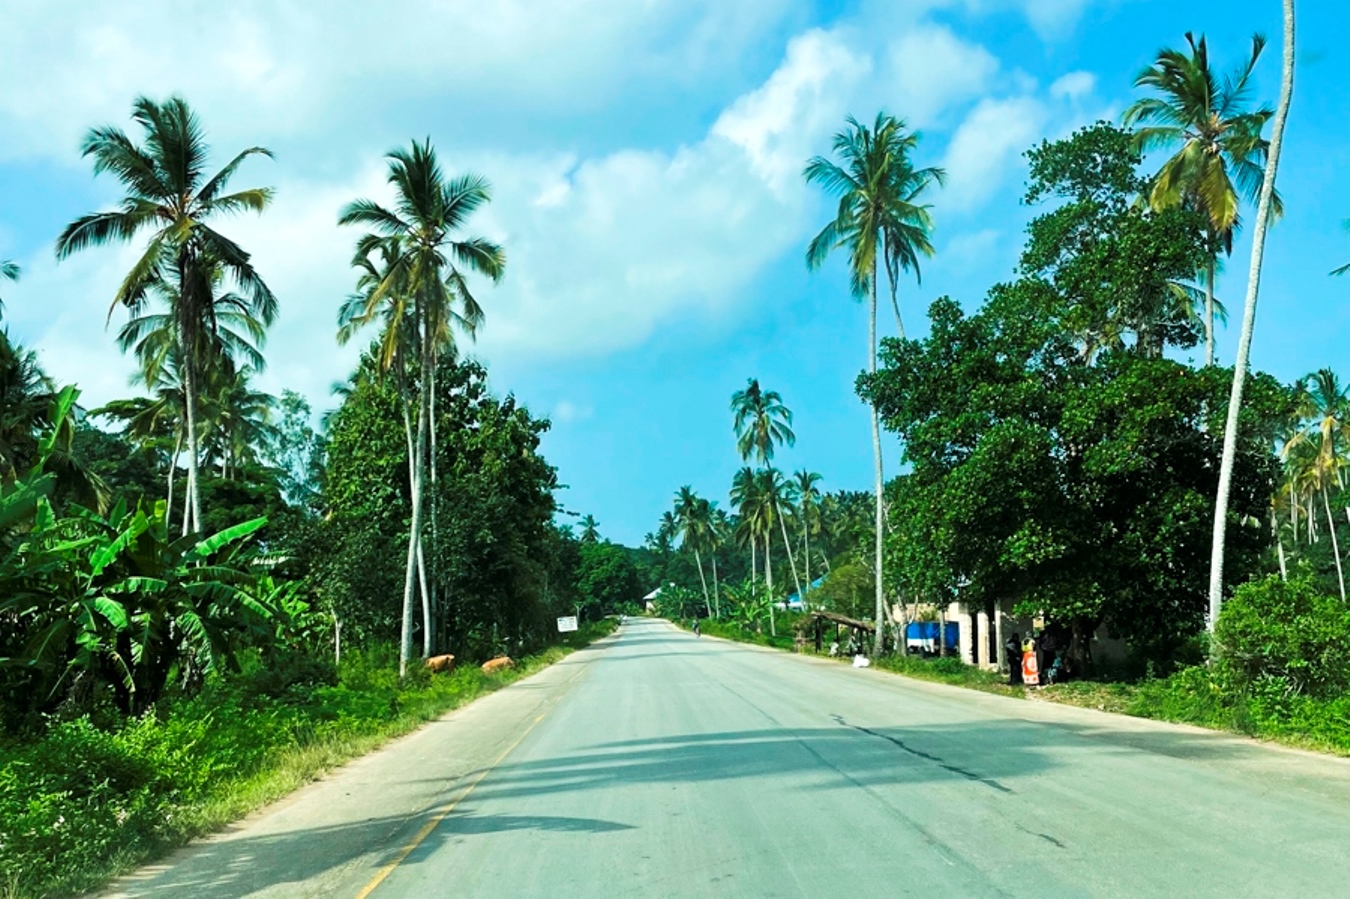 Driving as a tourist in Zanzibar